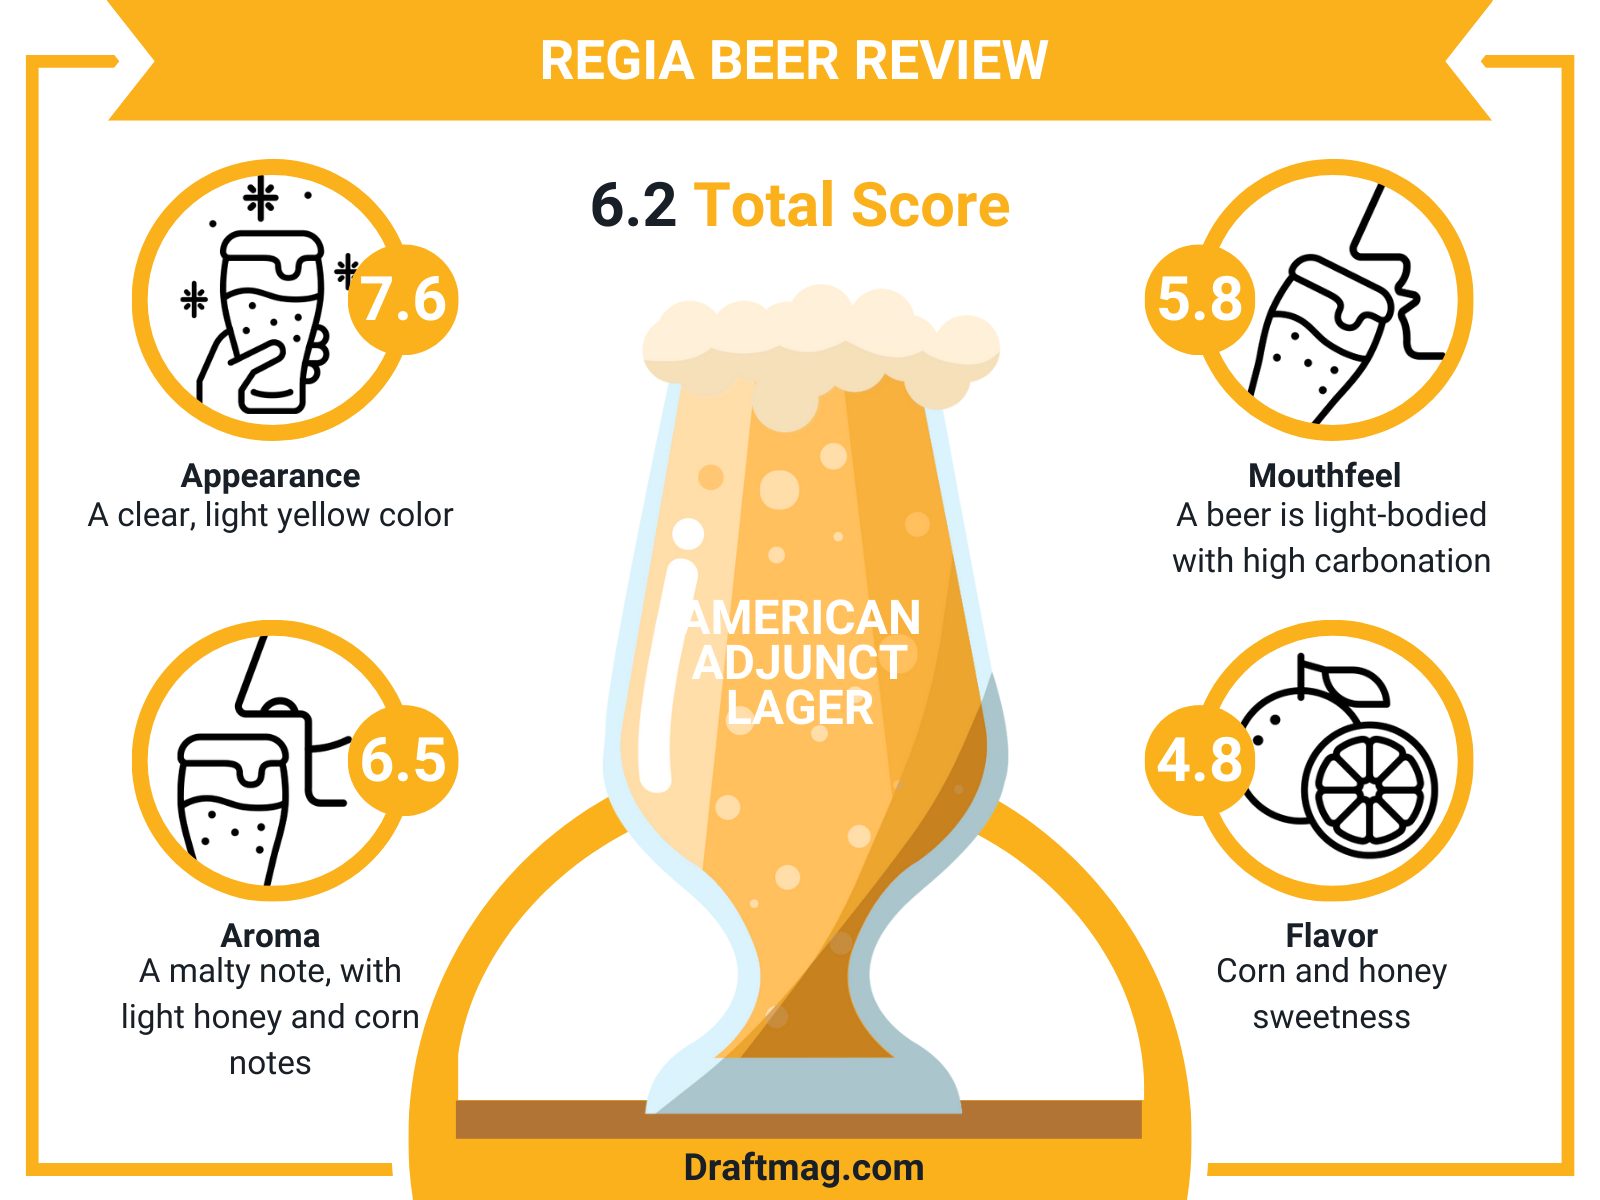 Regia beer review infographic